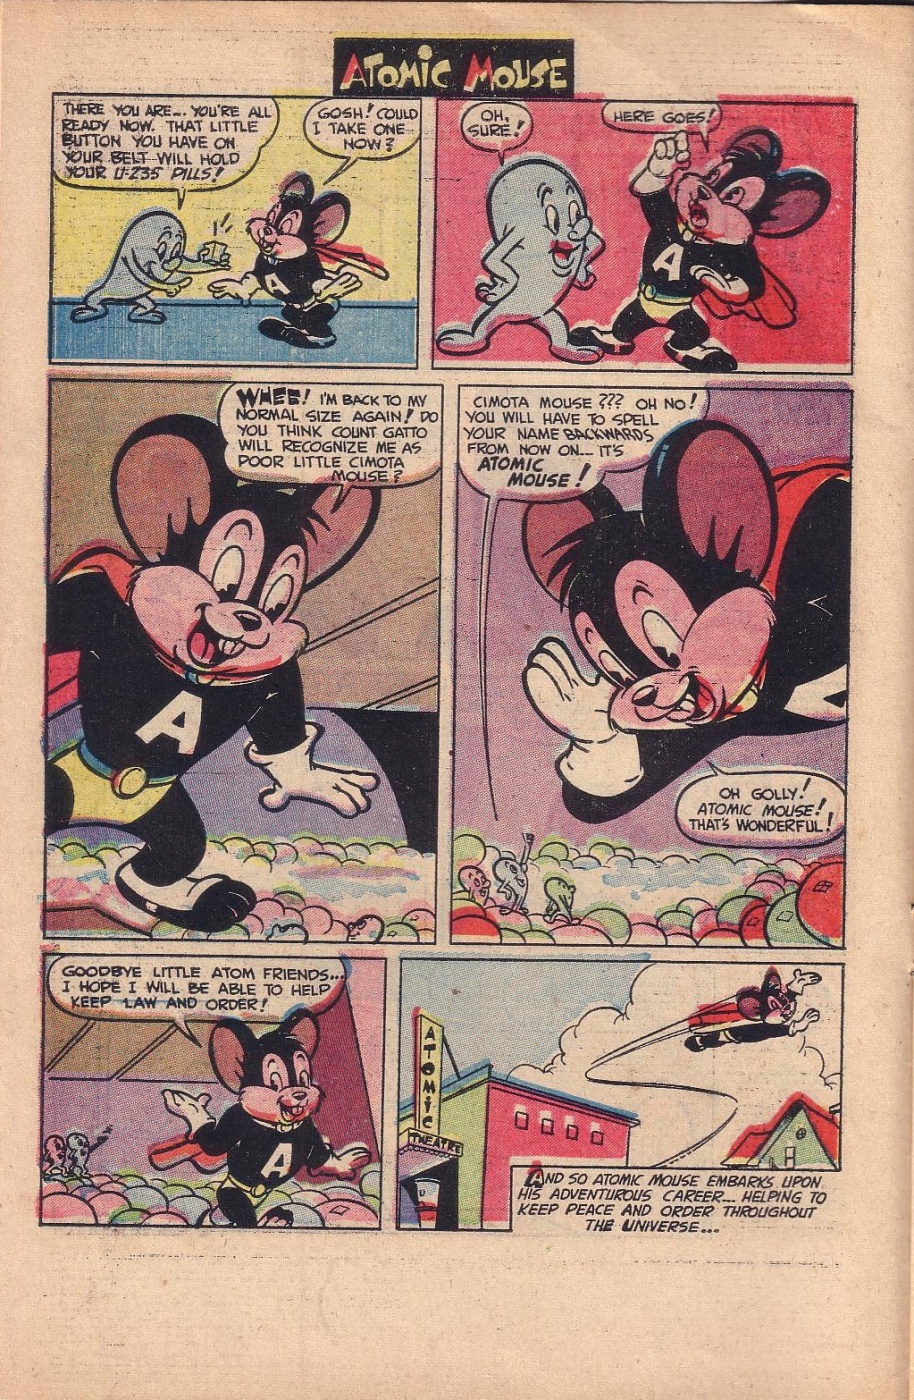 Atomic Mouse Comics - Funny Comics (10)